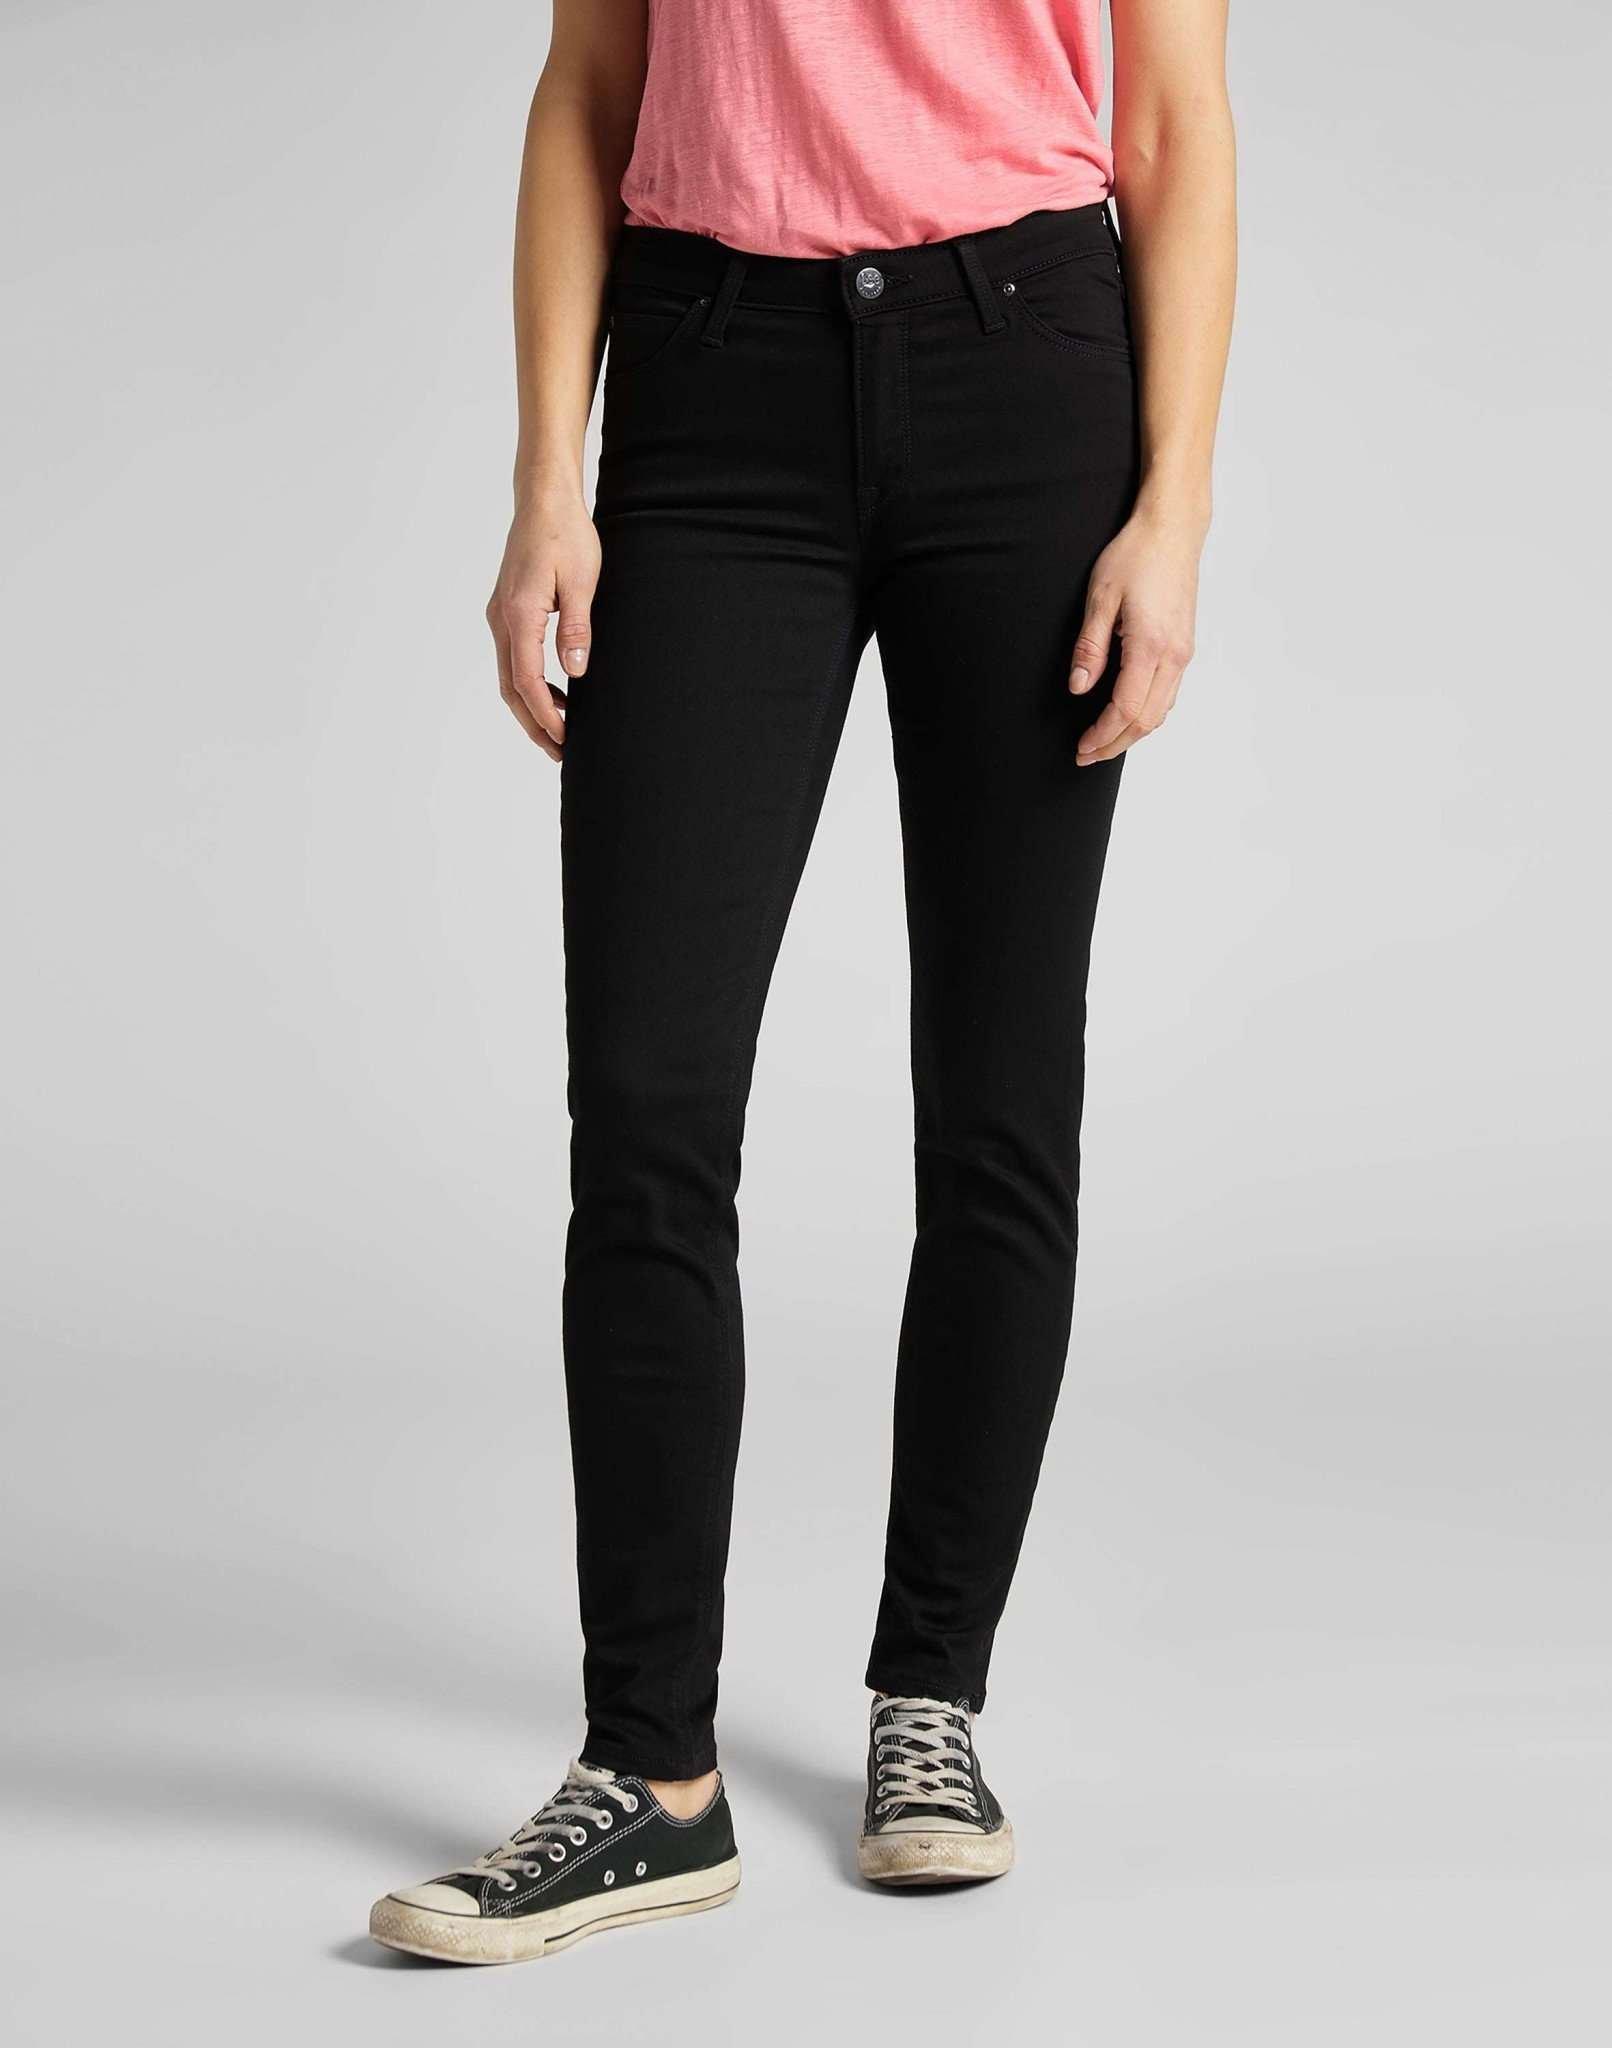 Jeans Skinny Fit Scarlett Damen Schwarz L31/W30 von Lee